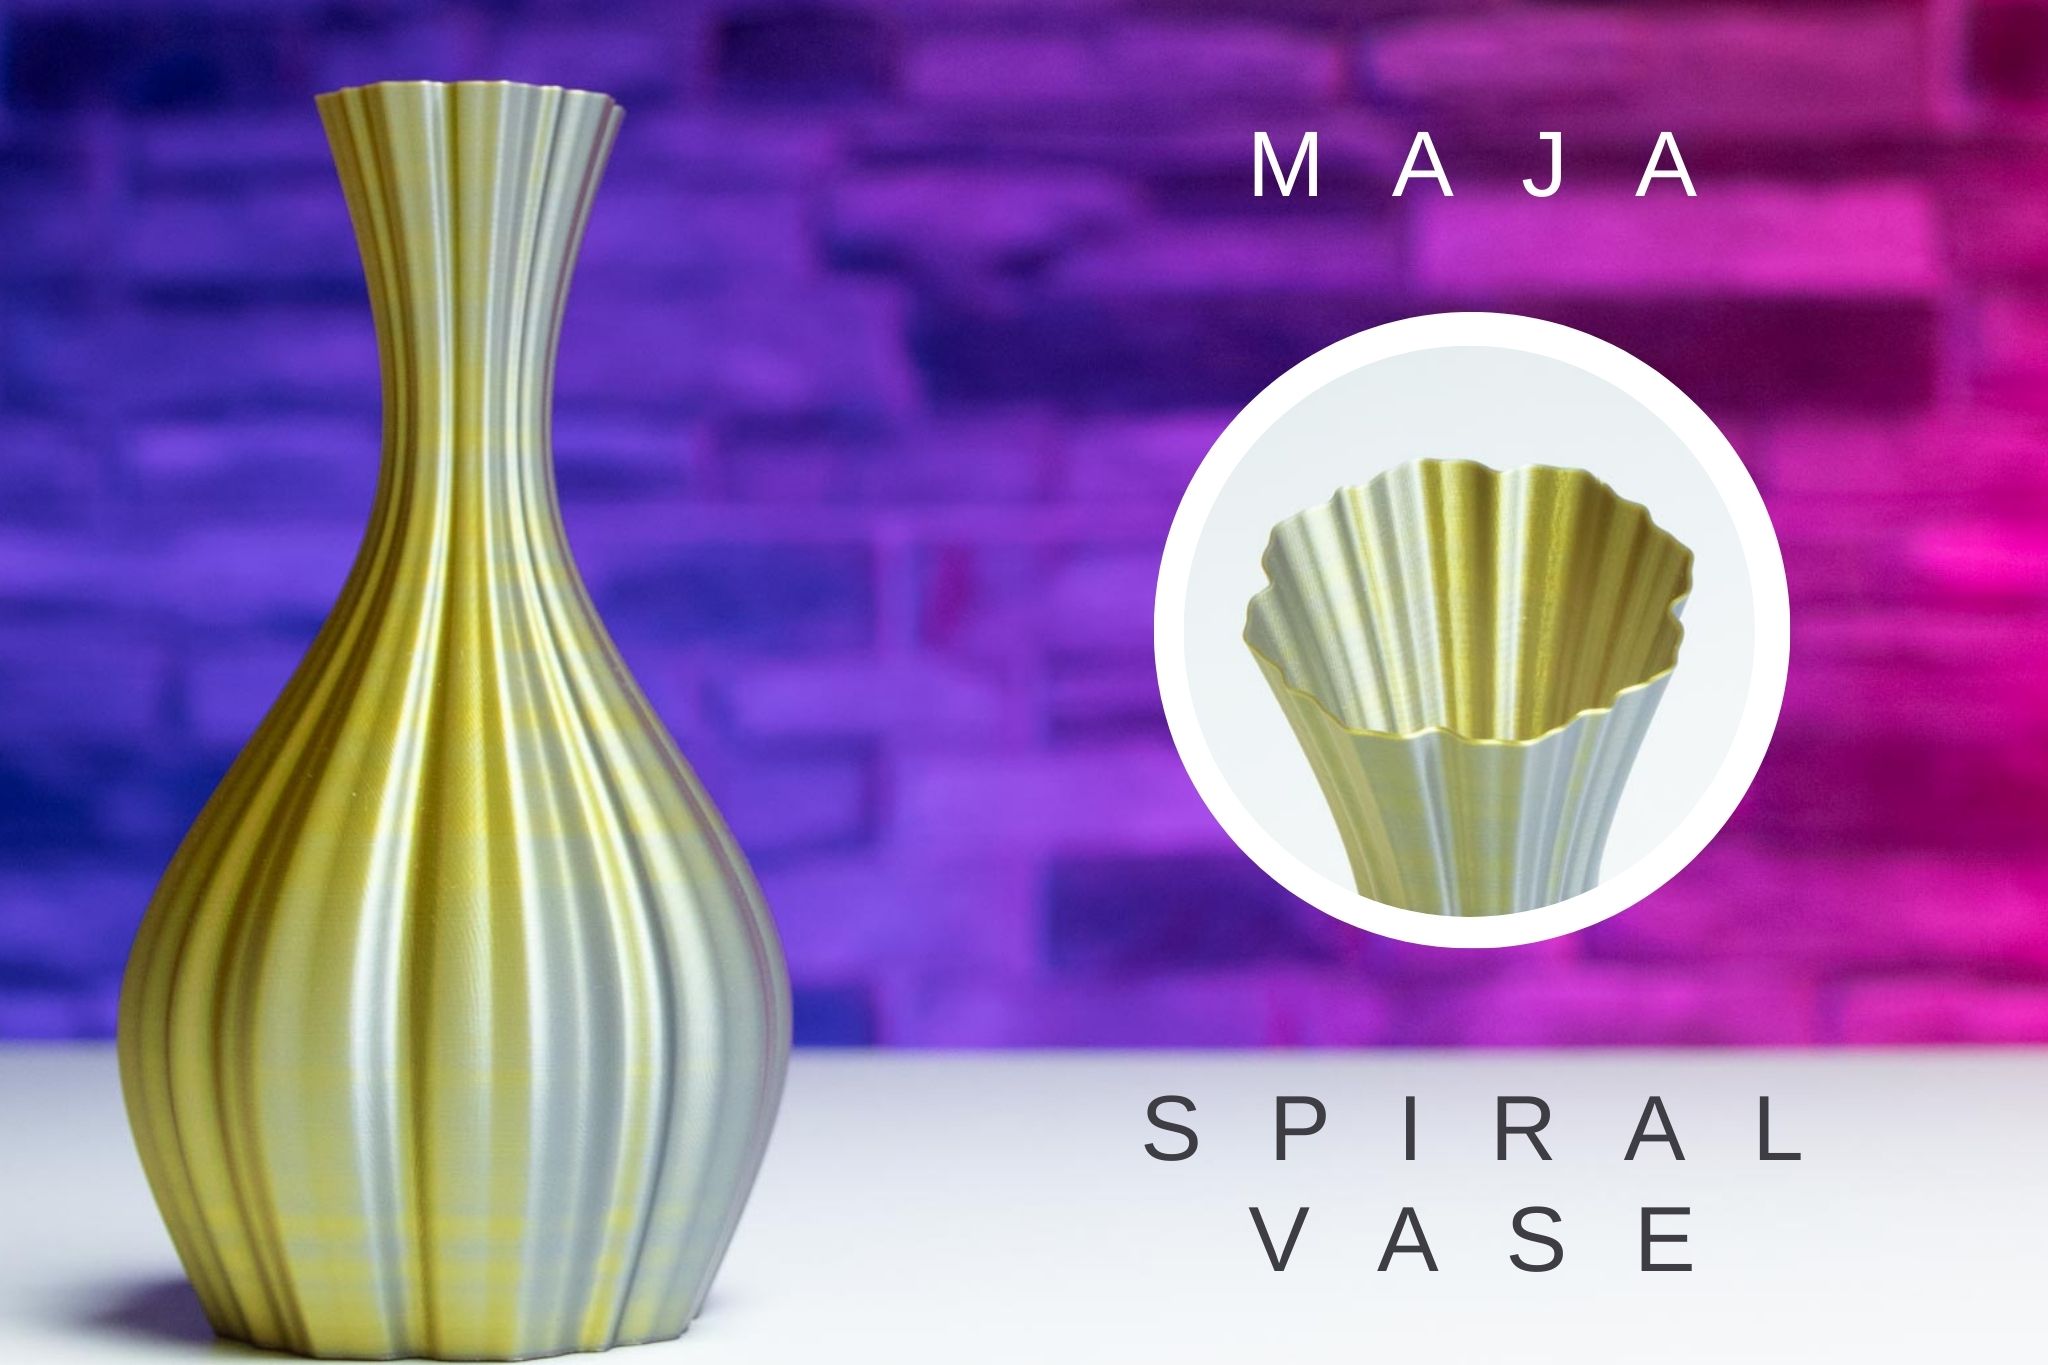 3D Printed Spiral Vase MAJA